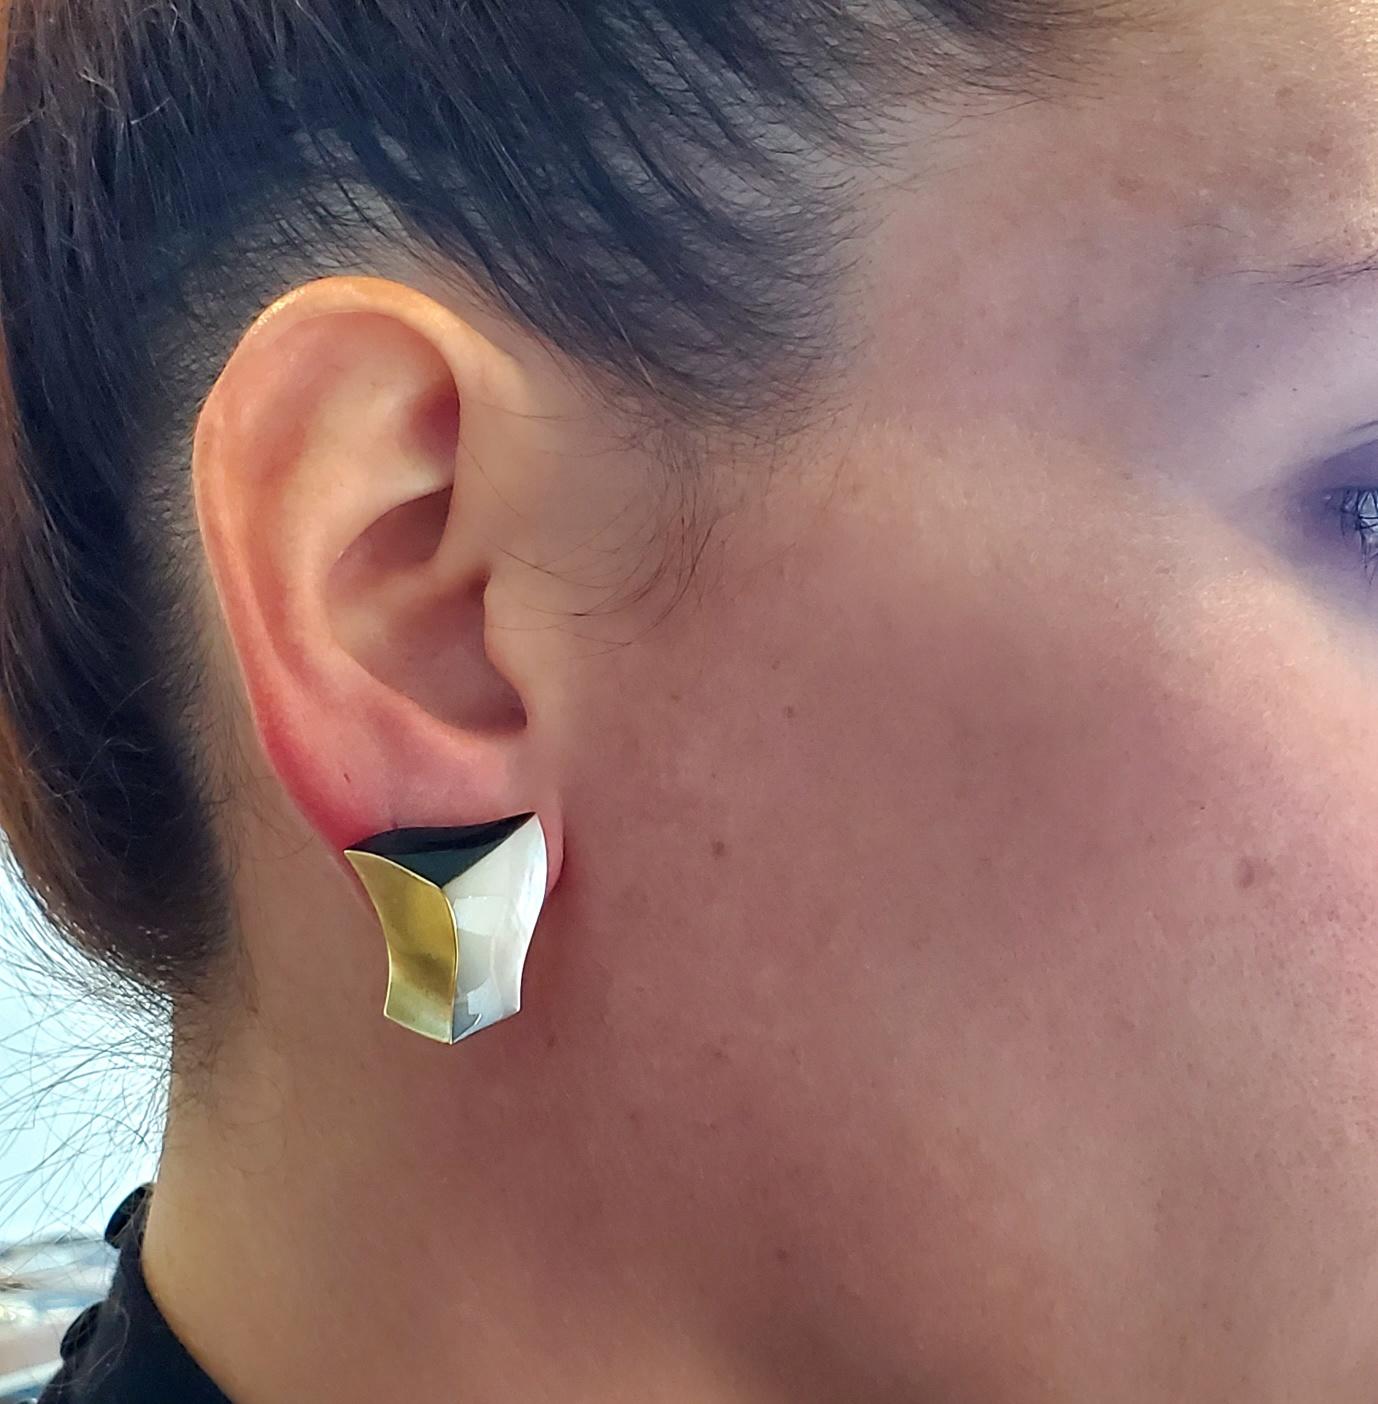 Angela Cummings 1980 NY Geometric Earrings 18Kt Yellow Gold Black Jade & Nacre 2